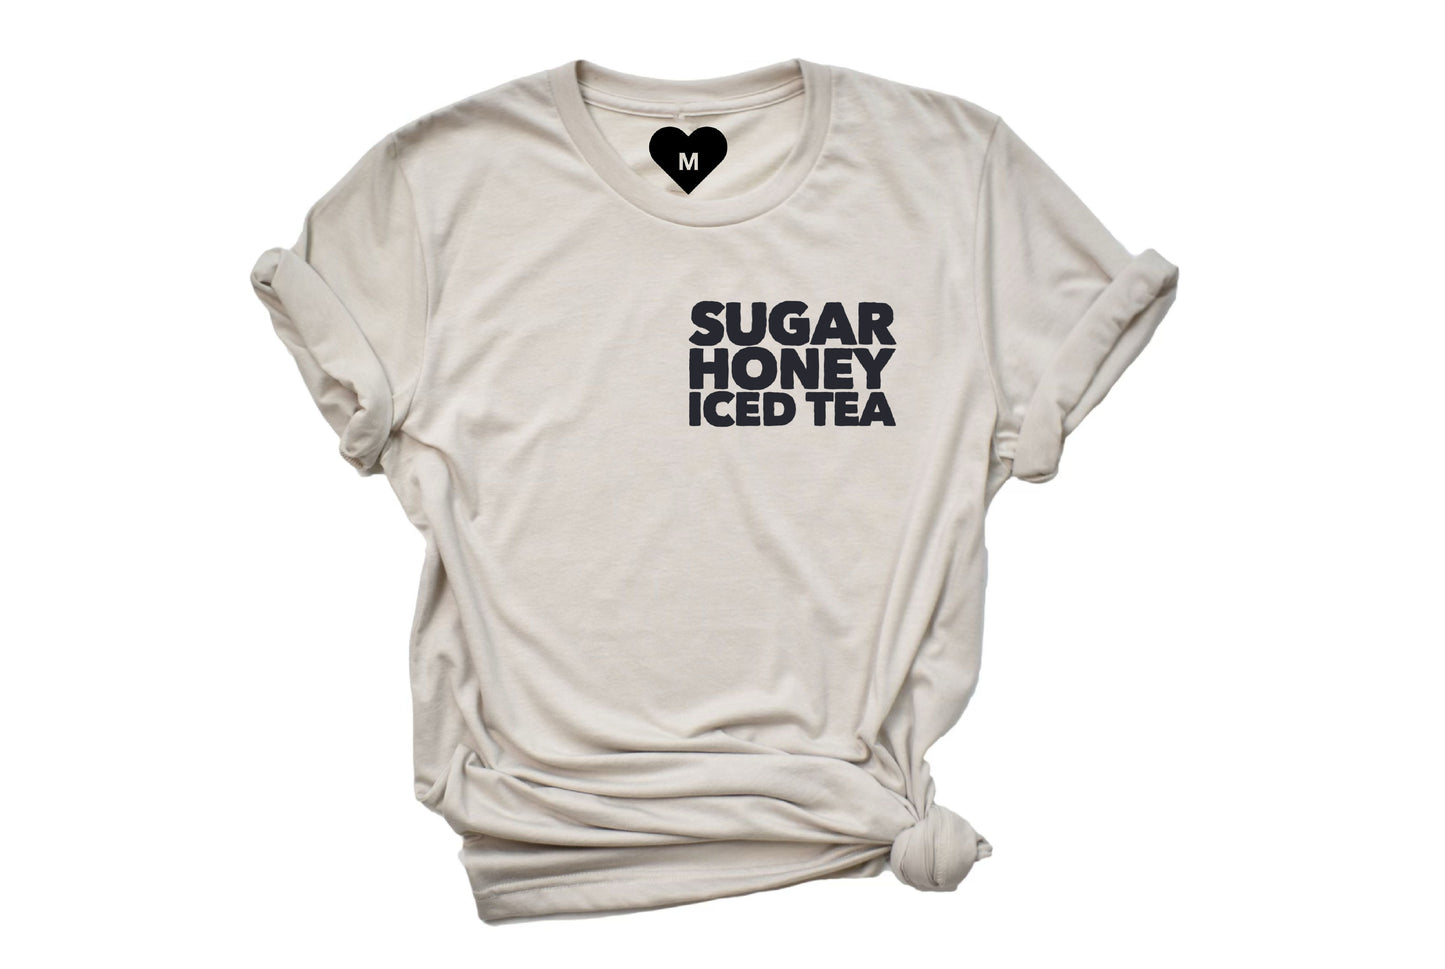 “Sugar Honey Iced Tea” Boyfriend Tee